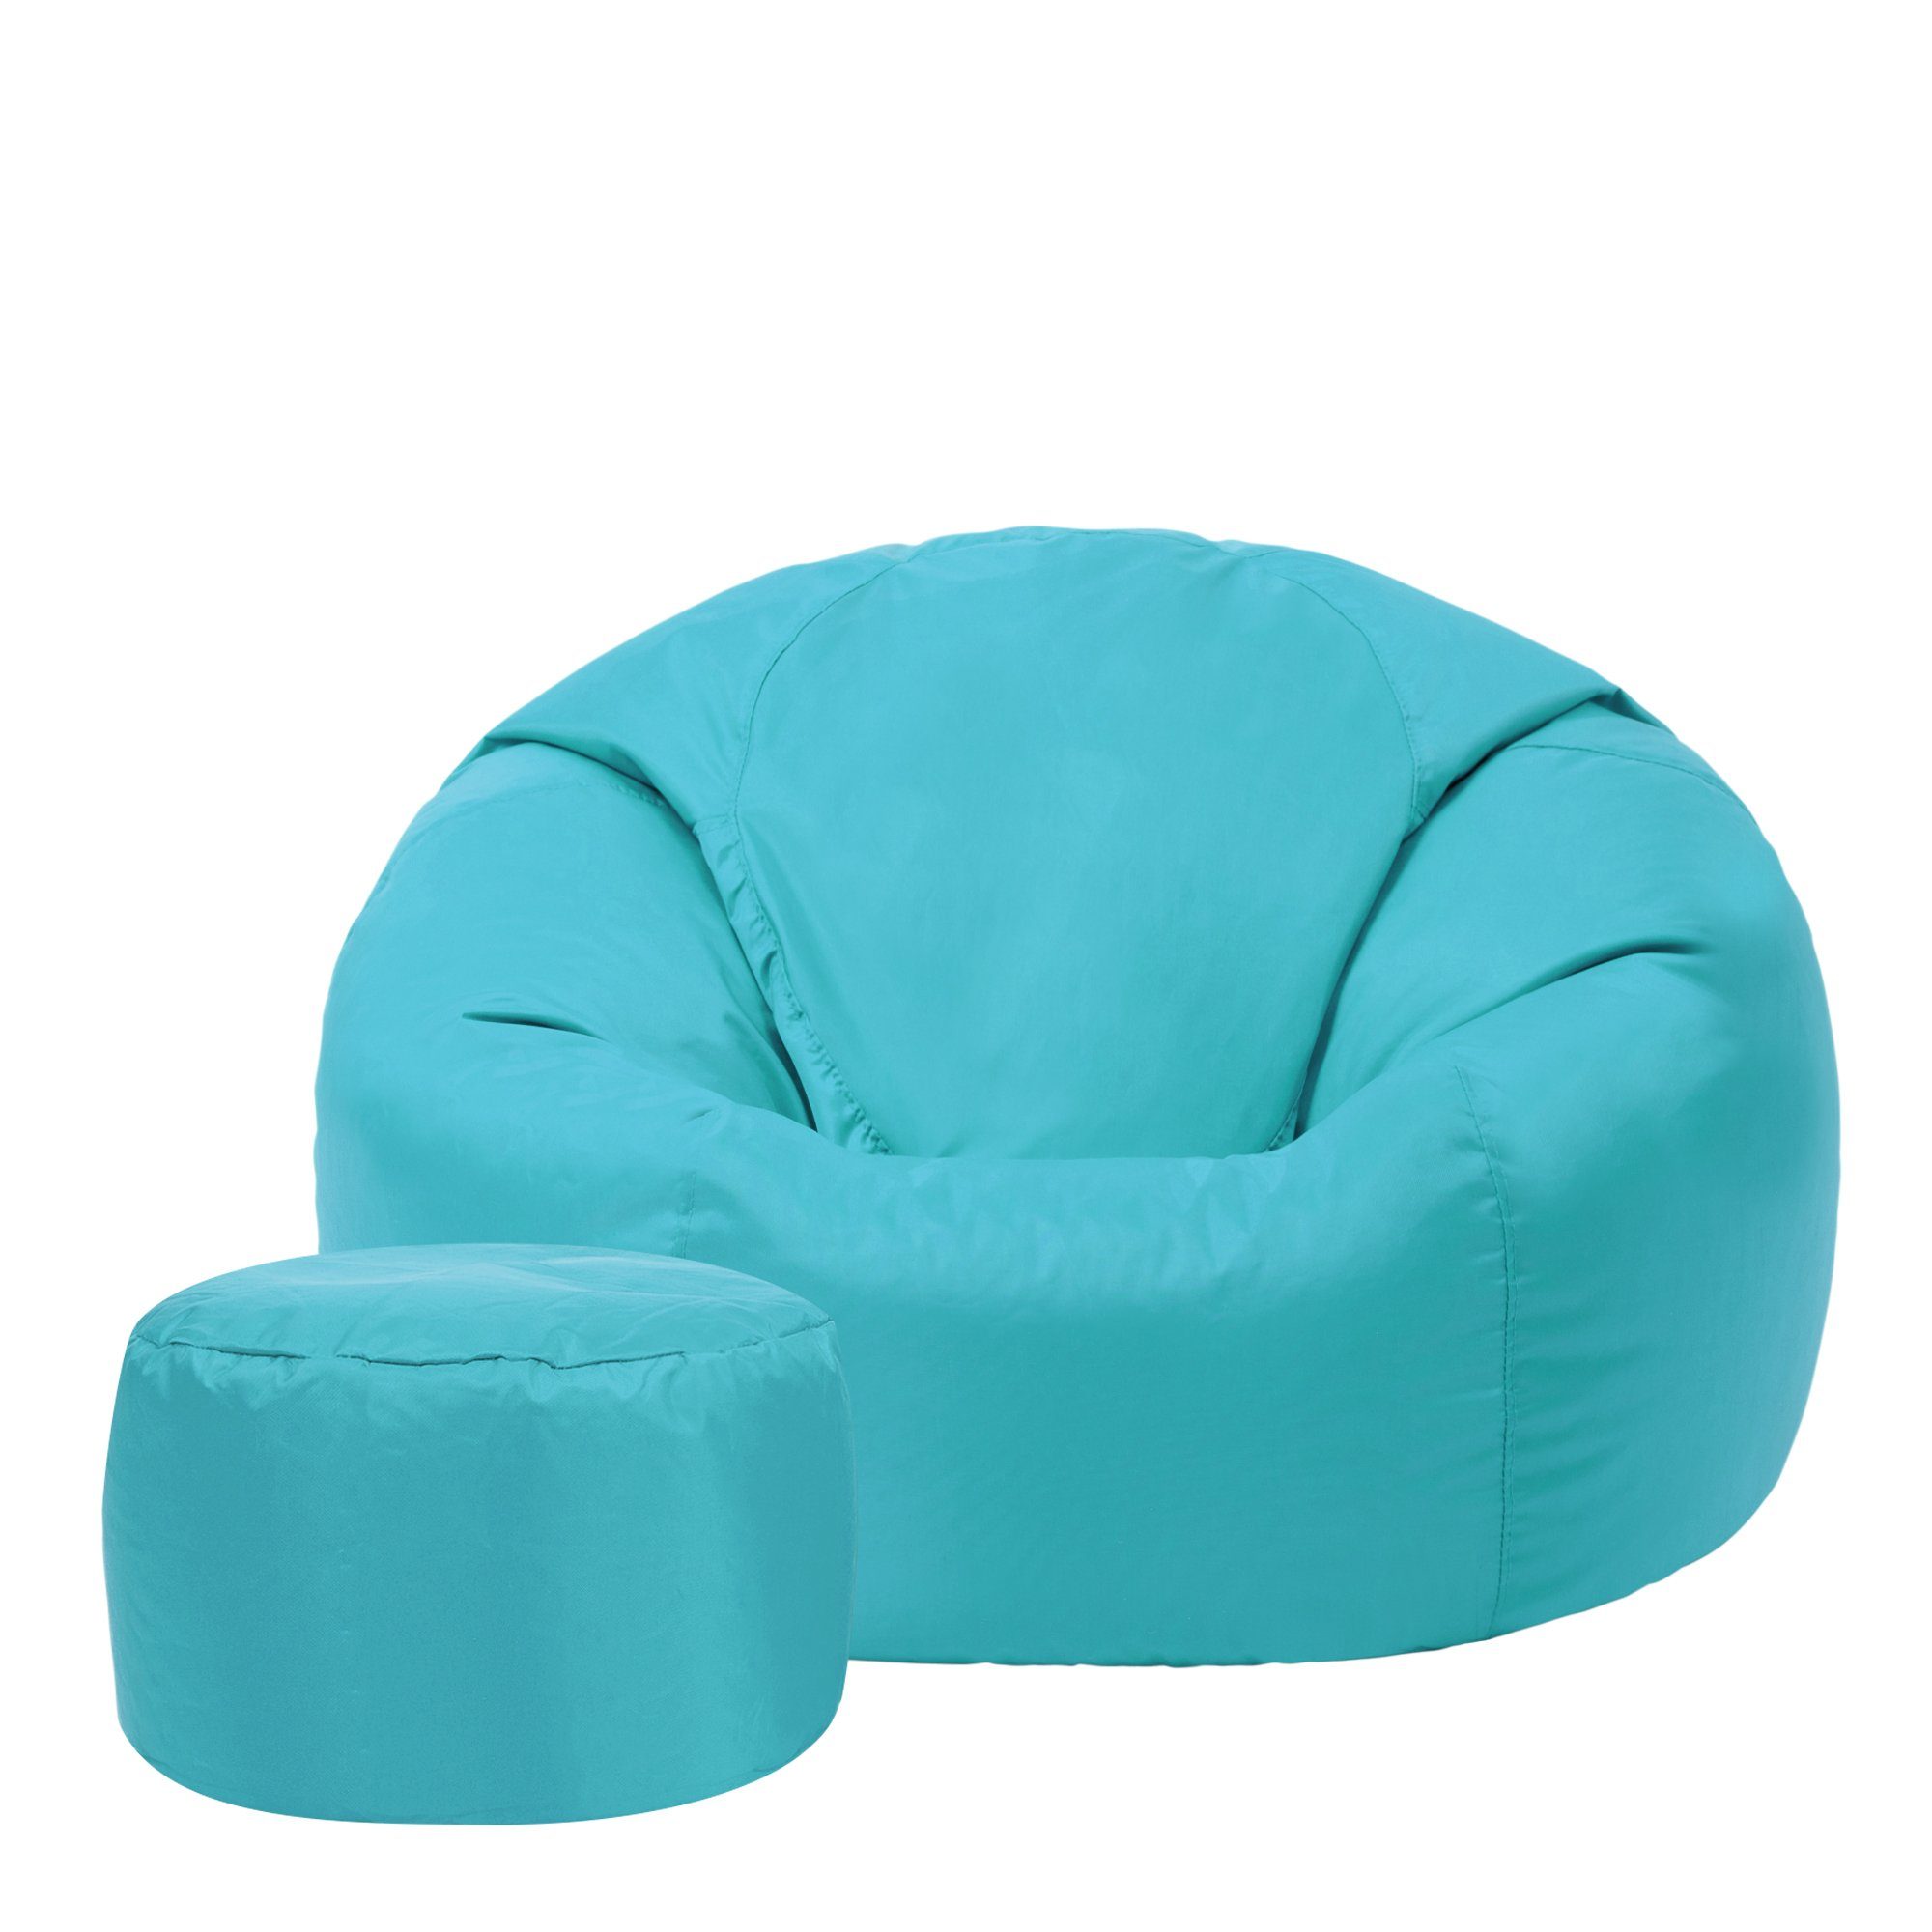 Sitzpouf mit aquablau Klassischer Sitzsack Outdoor Veeva Sitzsack